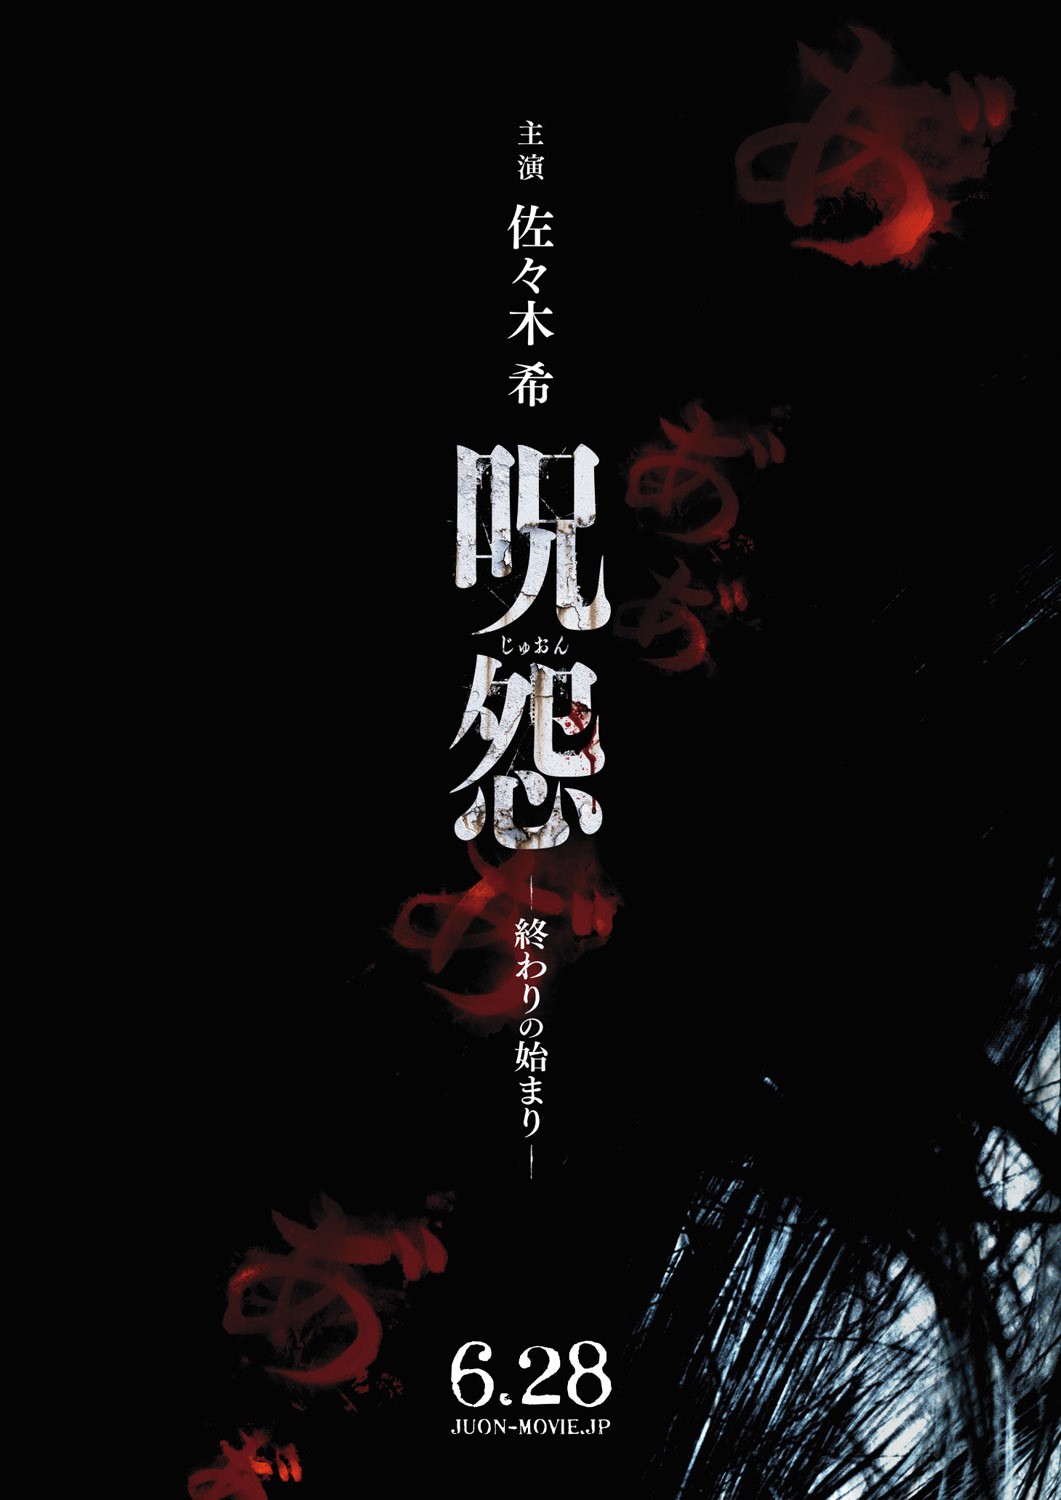 Extra Large Movie Poster Image for Ju-on: Owari no hajimari (#2 of 3)